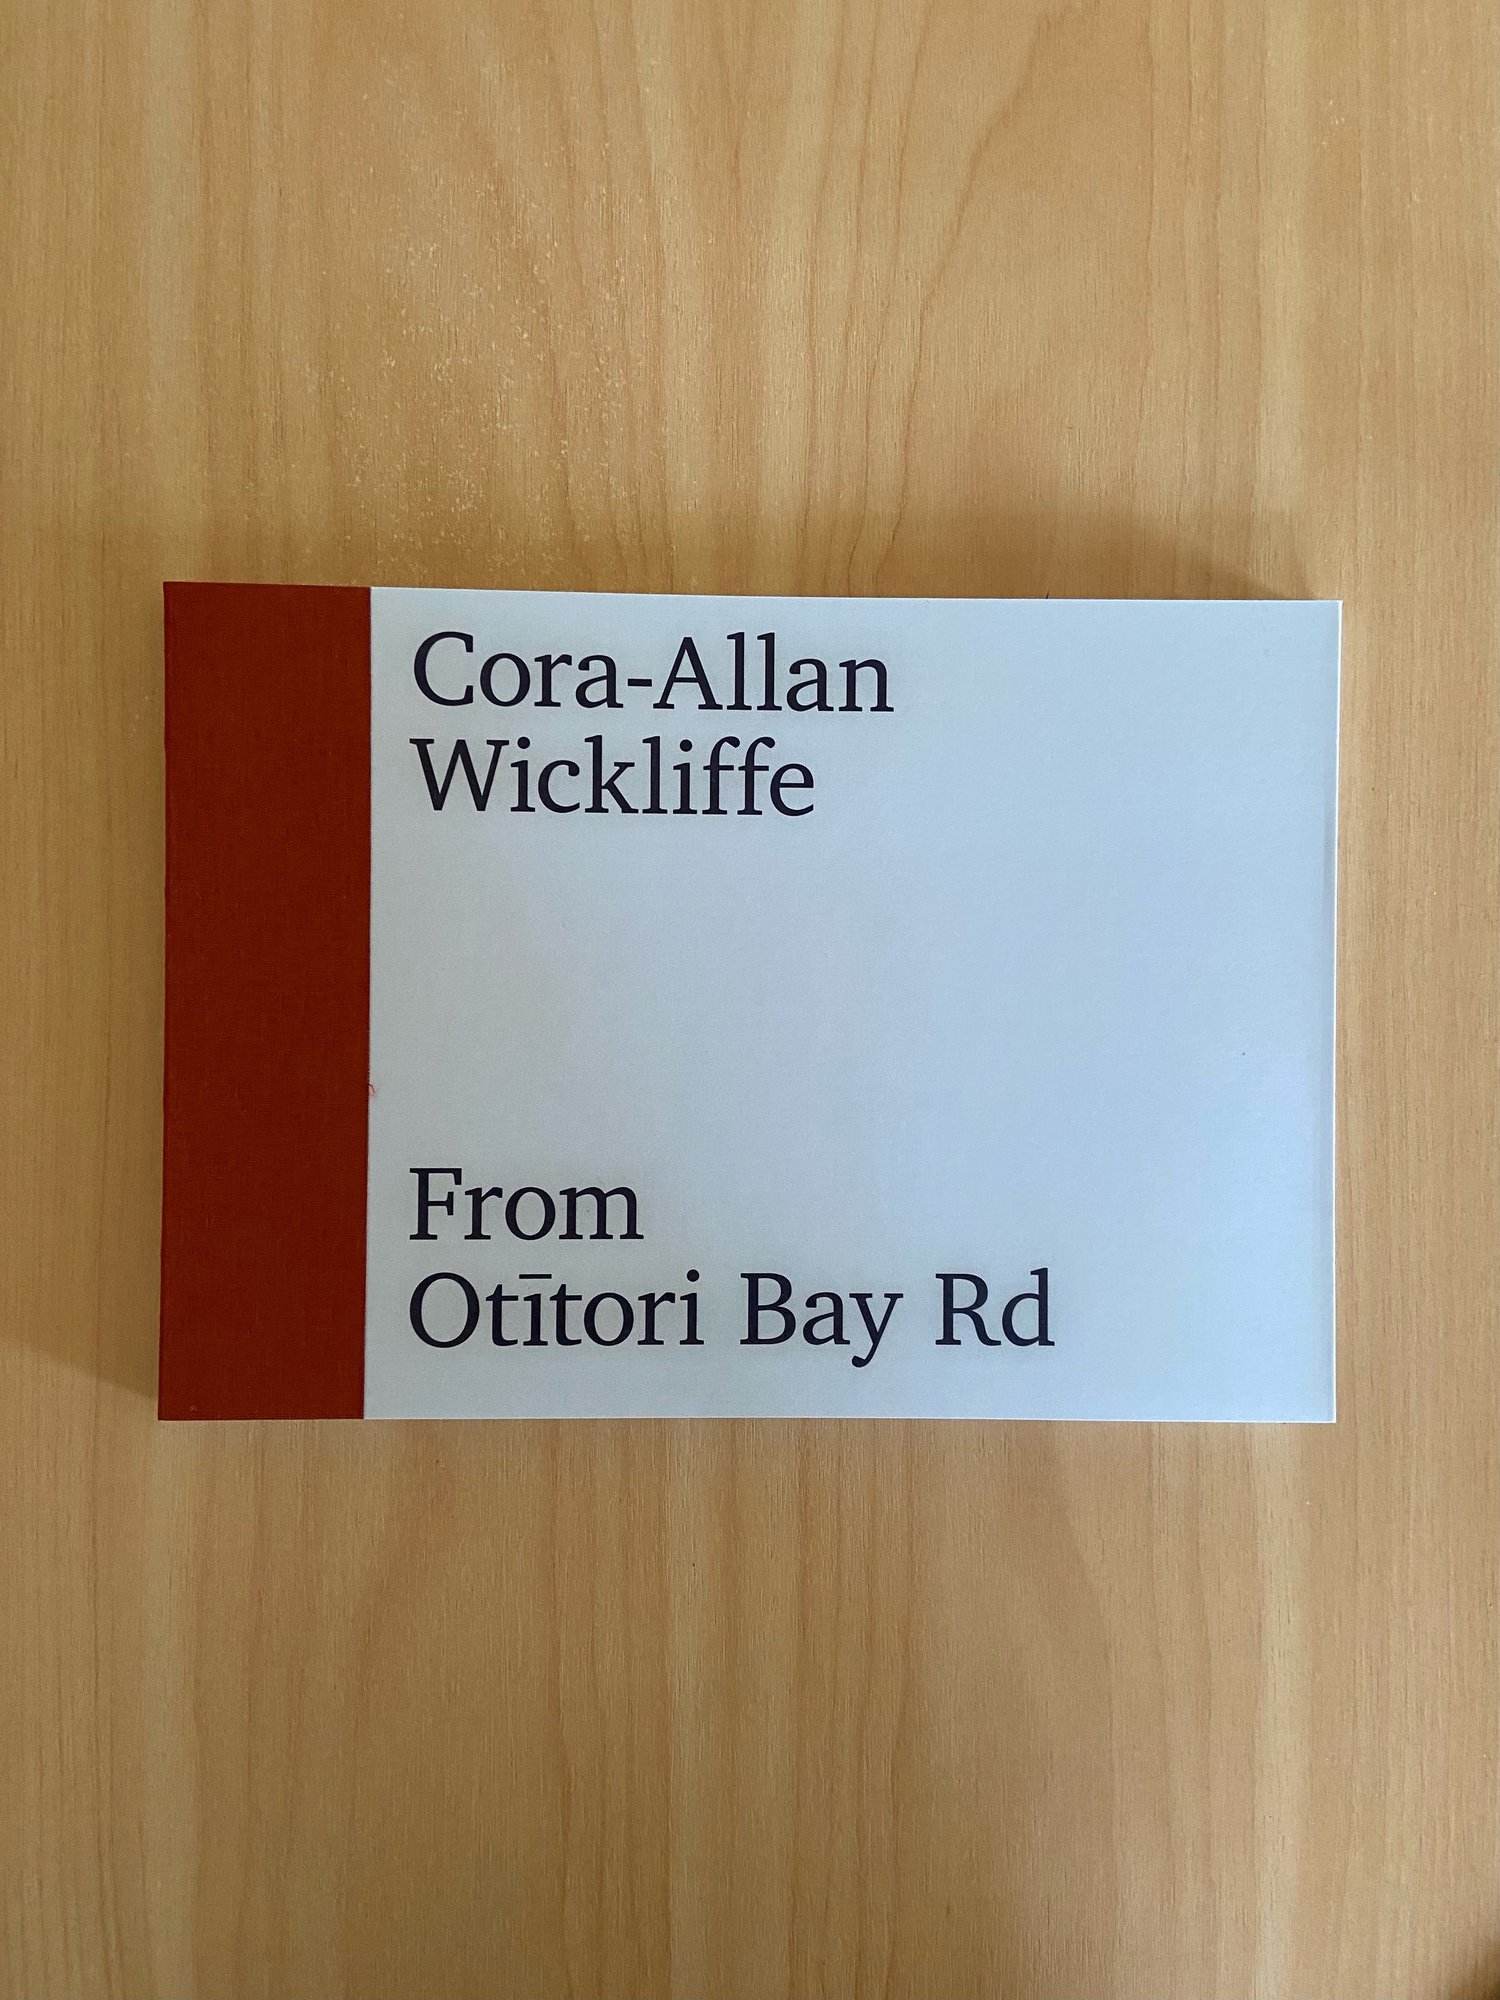 From Otītori Bay Rd by Cora-Allan Wickliffe